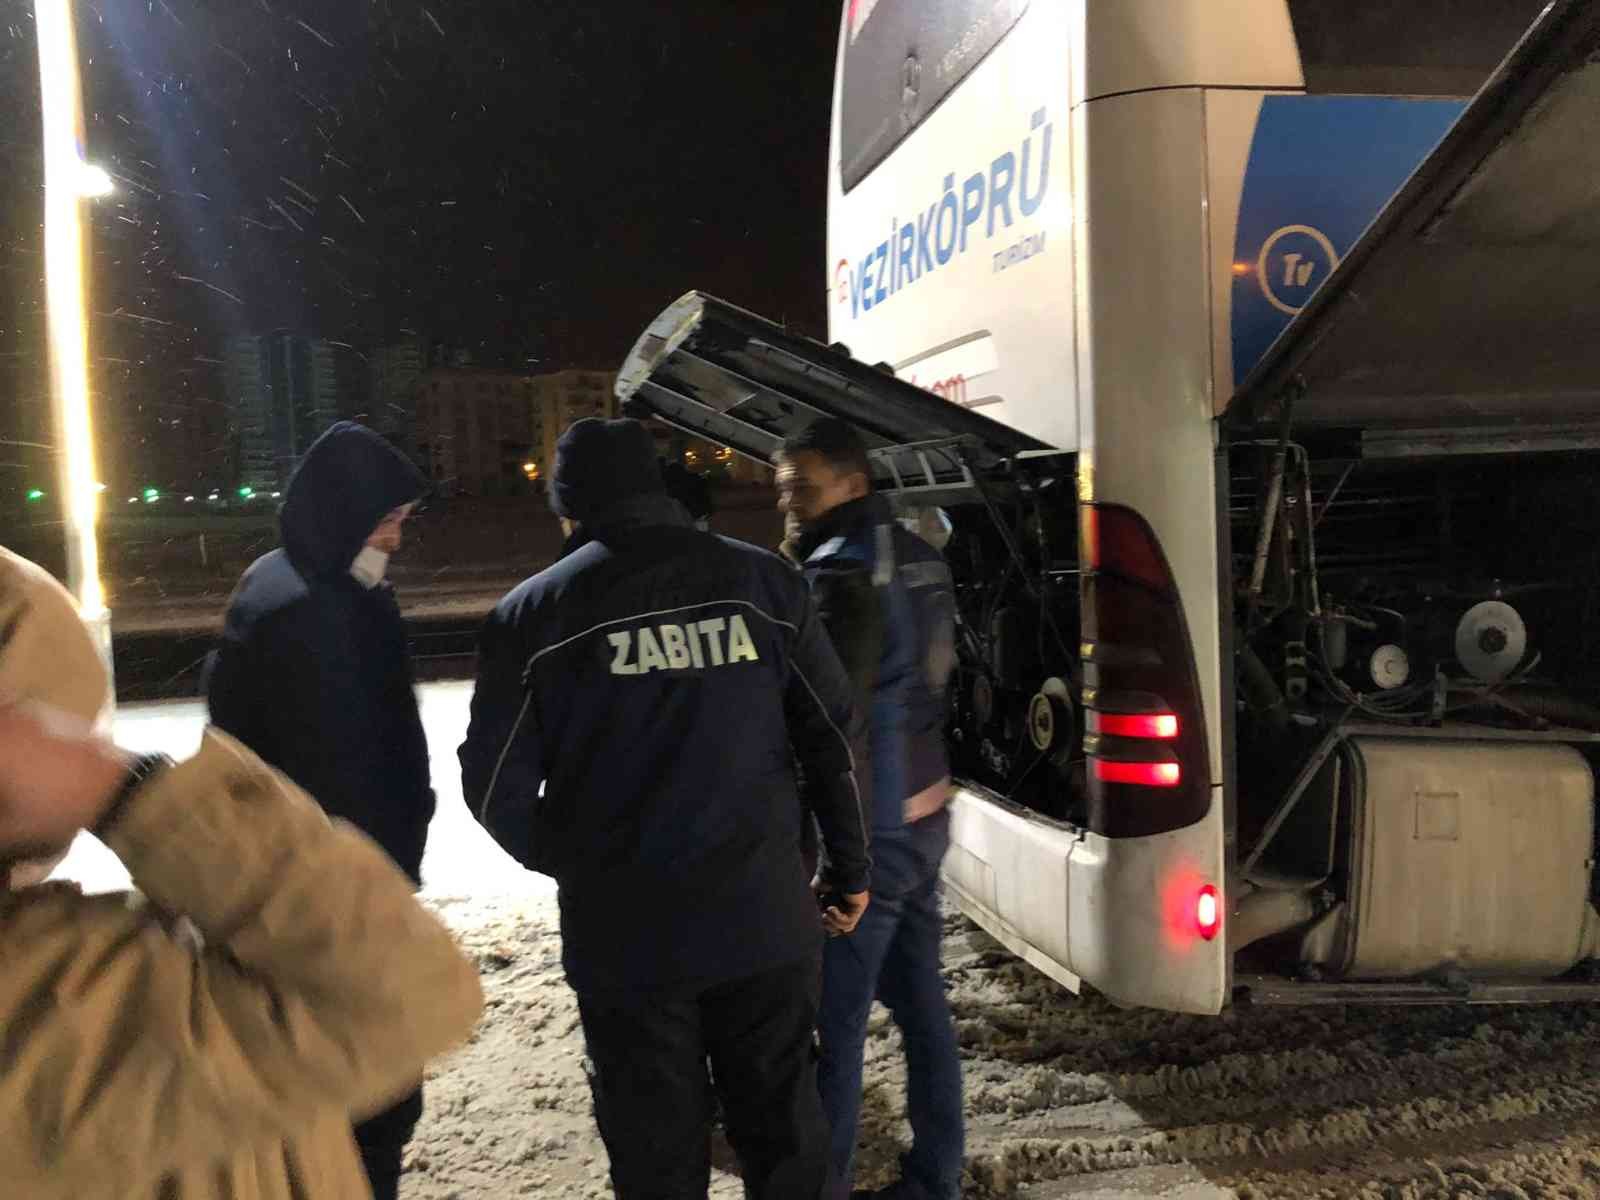 Ankara’da yolcu otobüs bozuldu, yolcular 3 saat mahsur kaldı #ankara